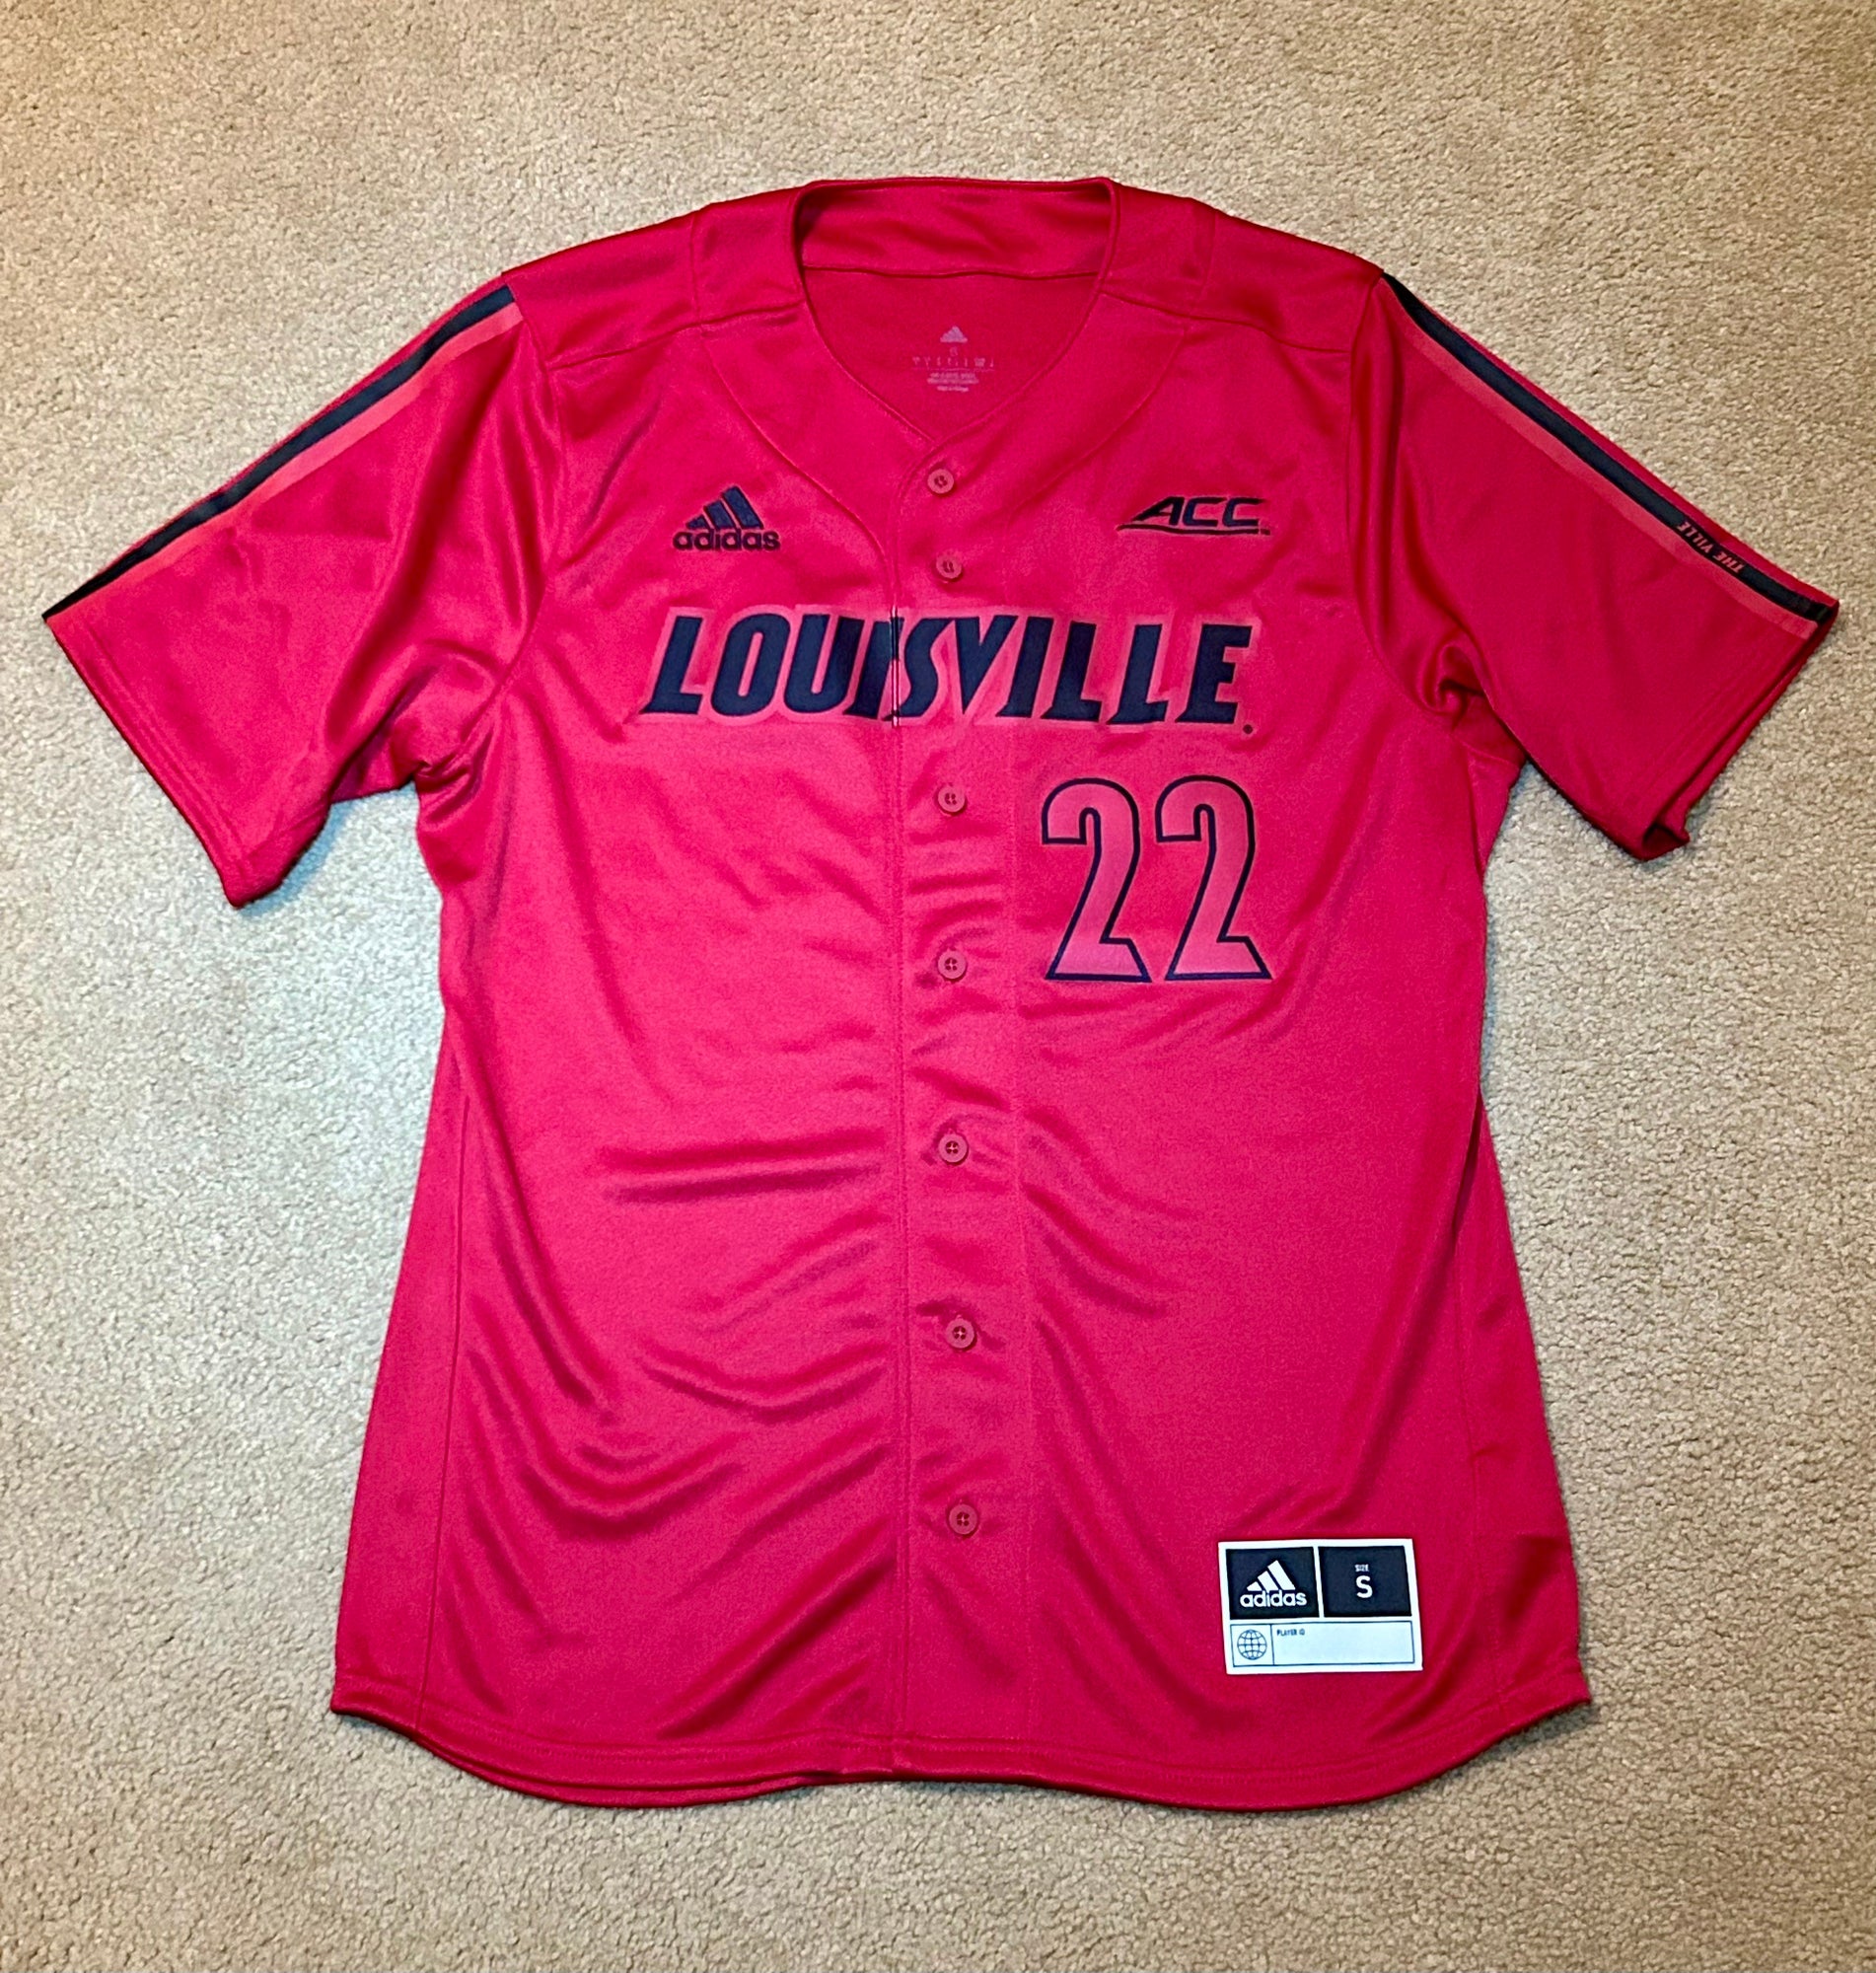 Men's adidas Gray Louisville Cardinals Authentic Baseball Jersey